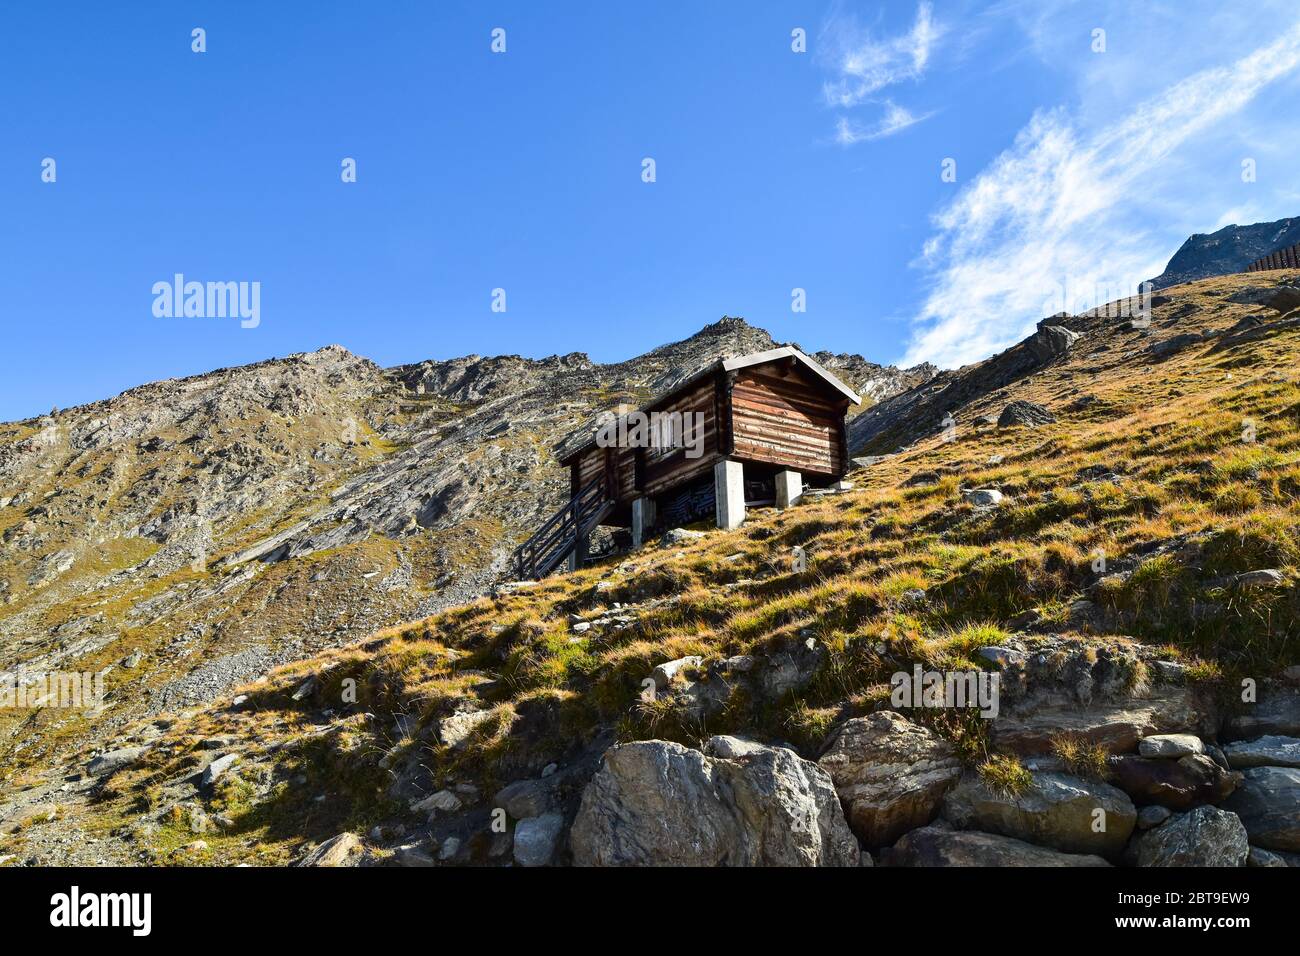 Farm building in alp mountain landscape. Stock Photo